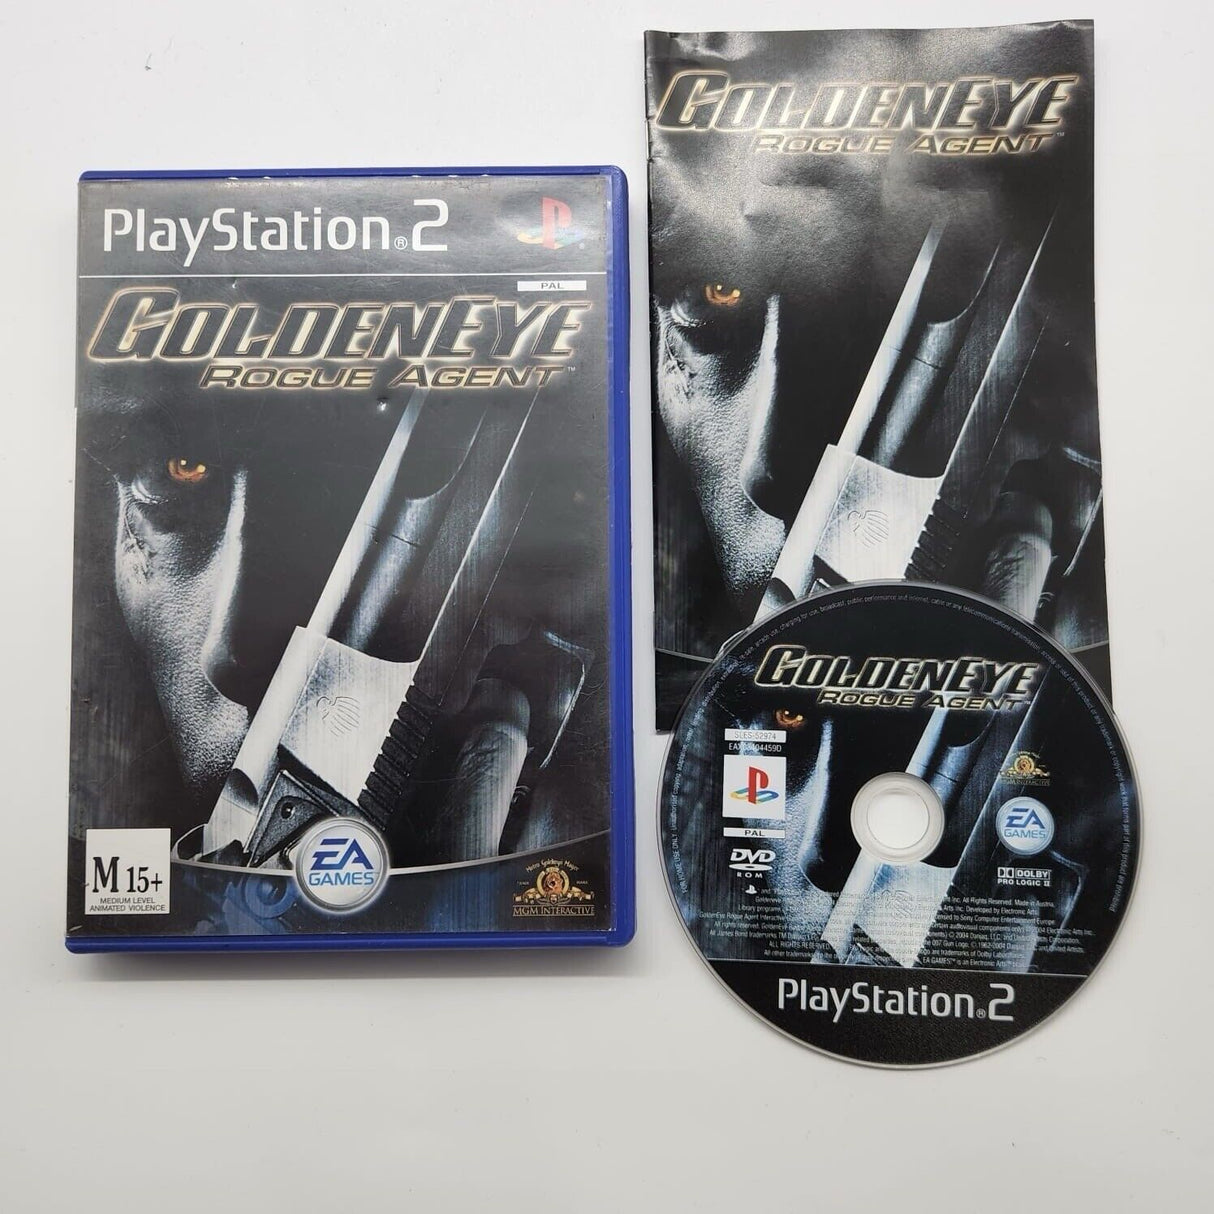 GoldenEye Rogue Agent PS2 Playstation 2 Game + Manual PAL